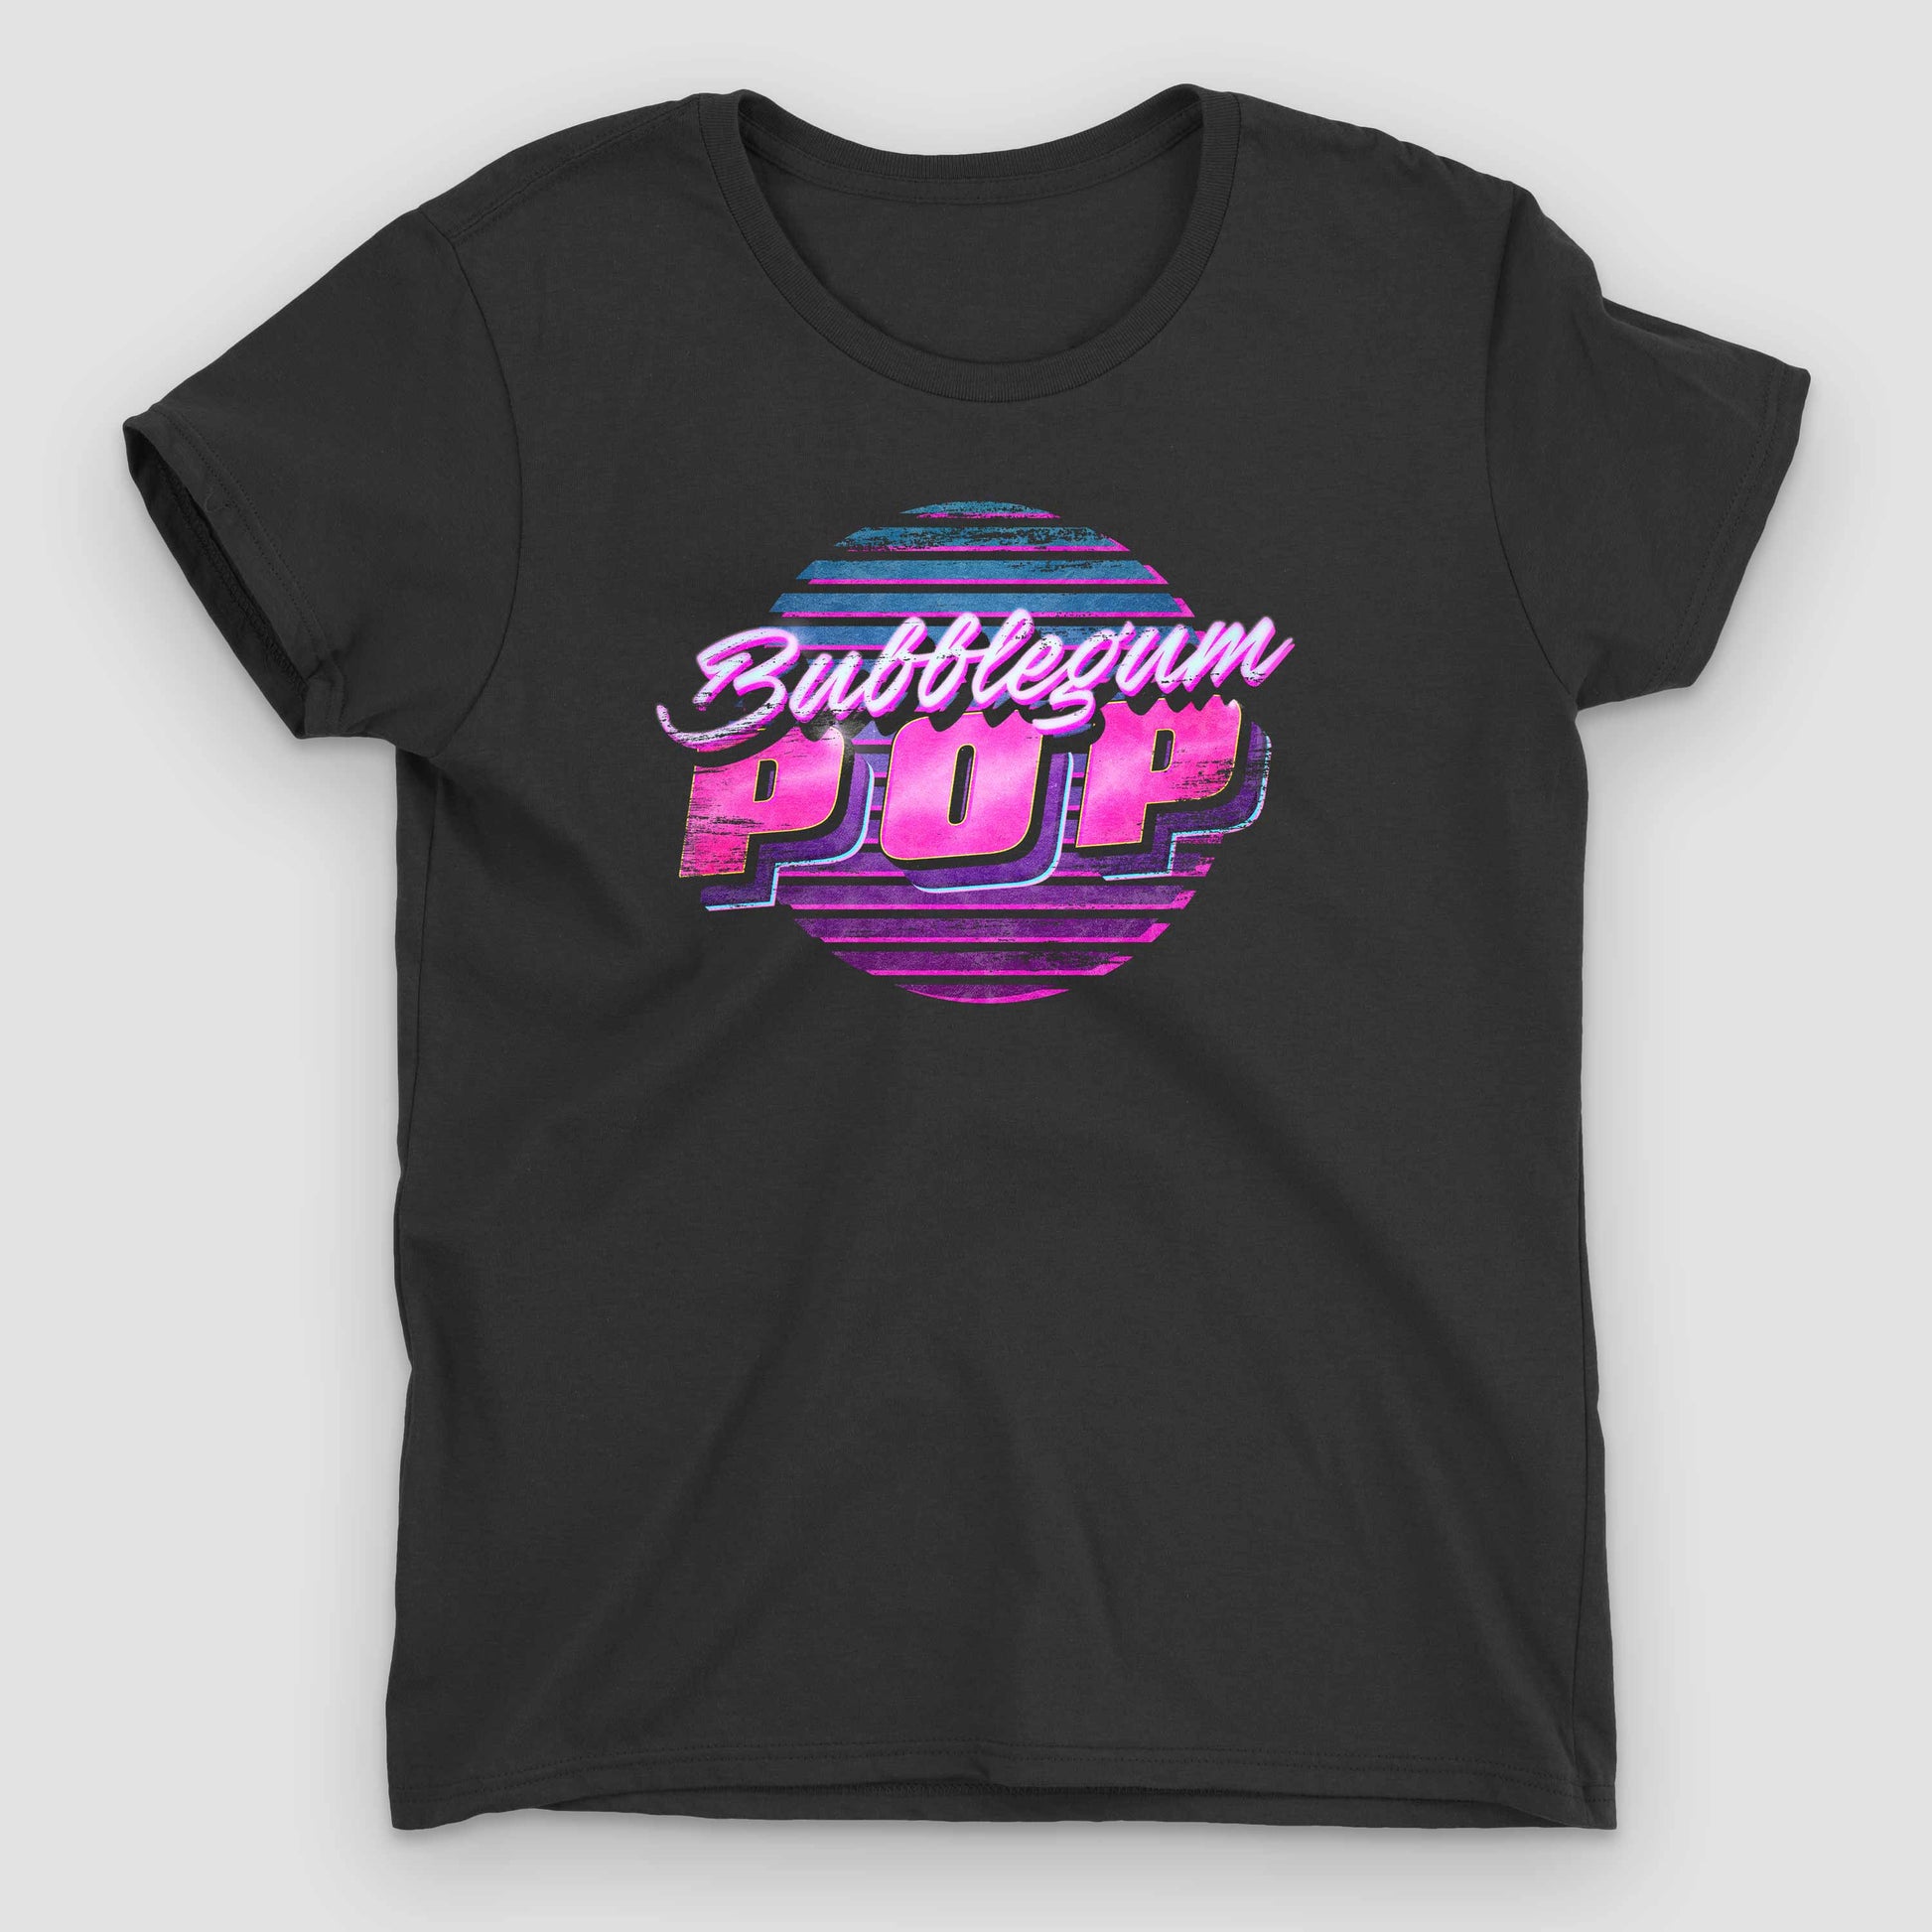  Bubblegum Pop Women's Graphic T-Shirt by Snaxtime